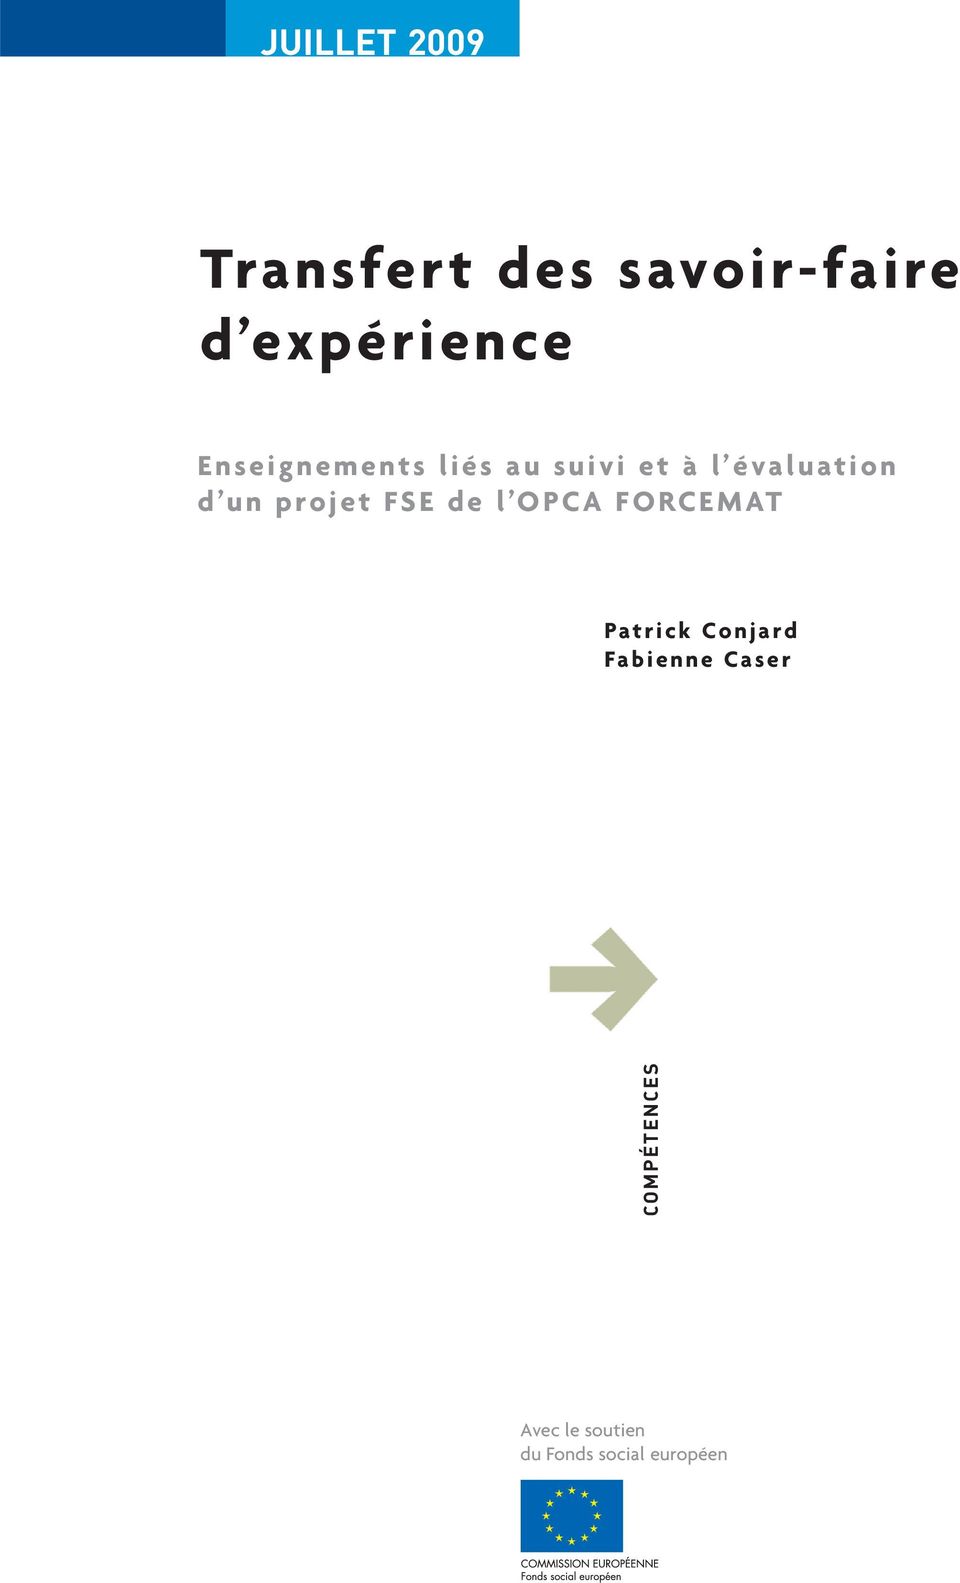 projet FSE de l OPCA FORCEMAT Patrick Conjard Fabienne